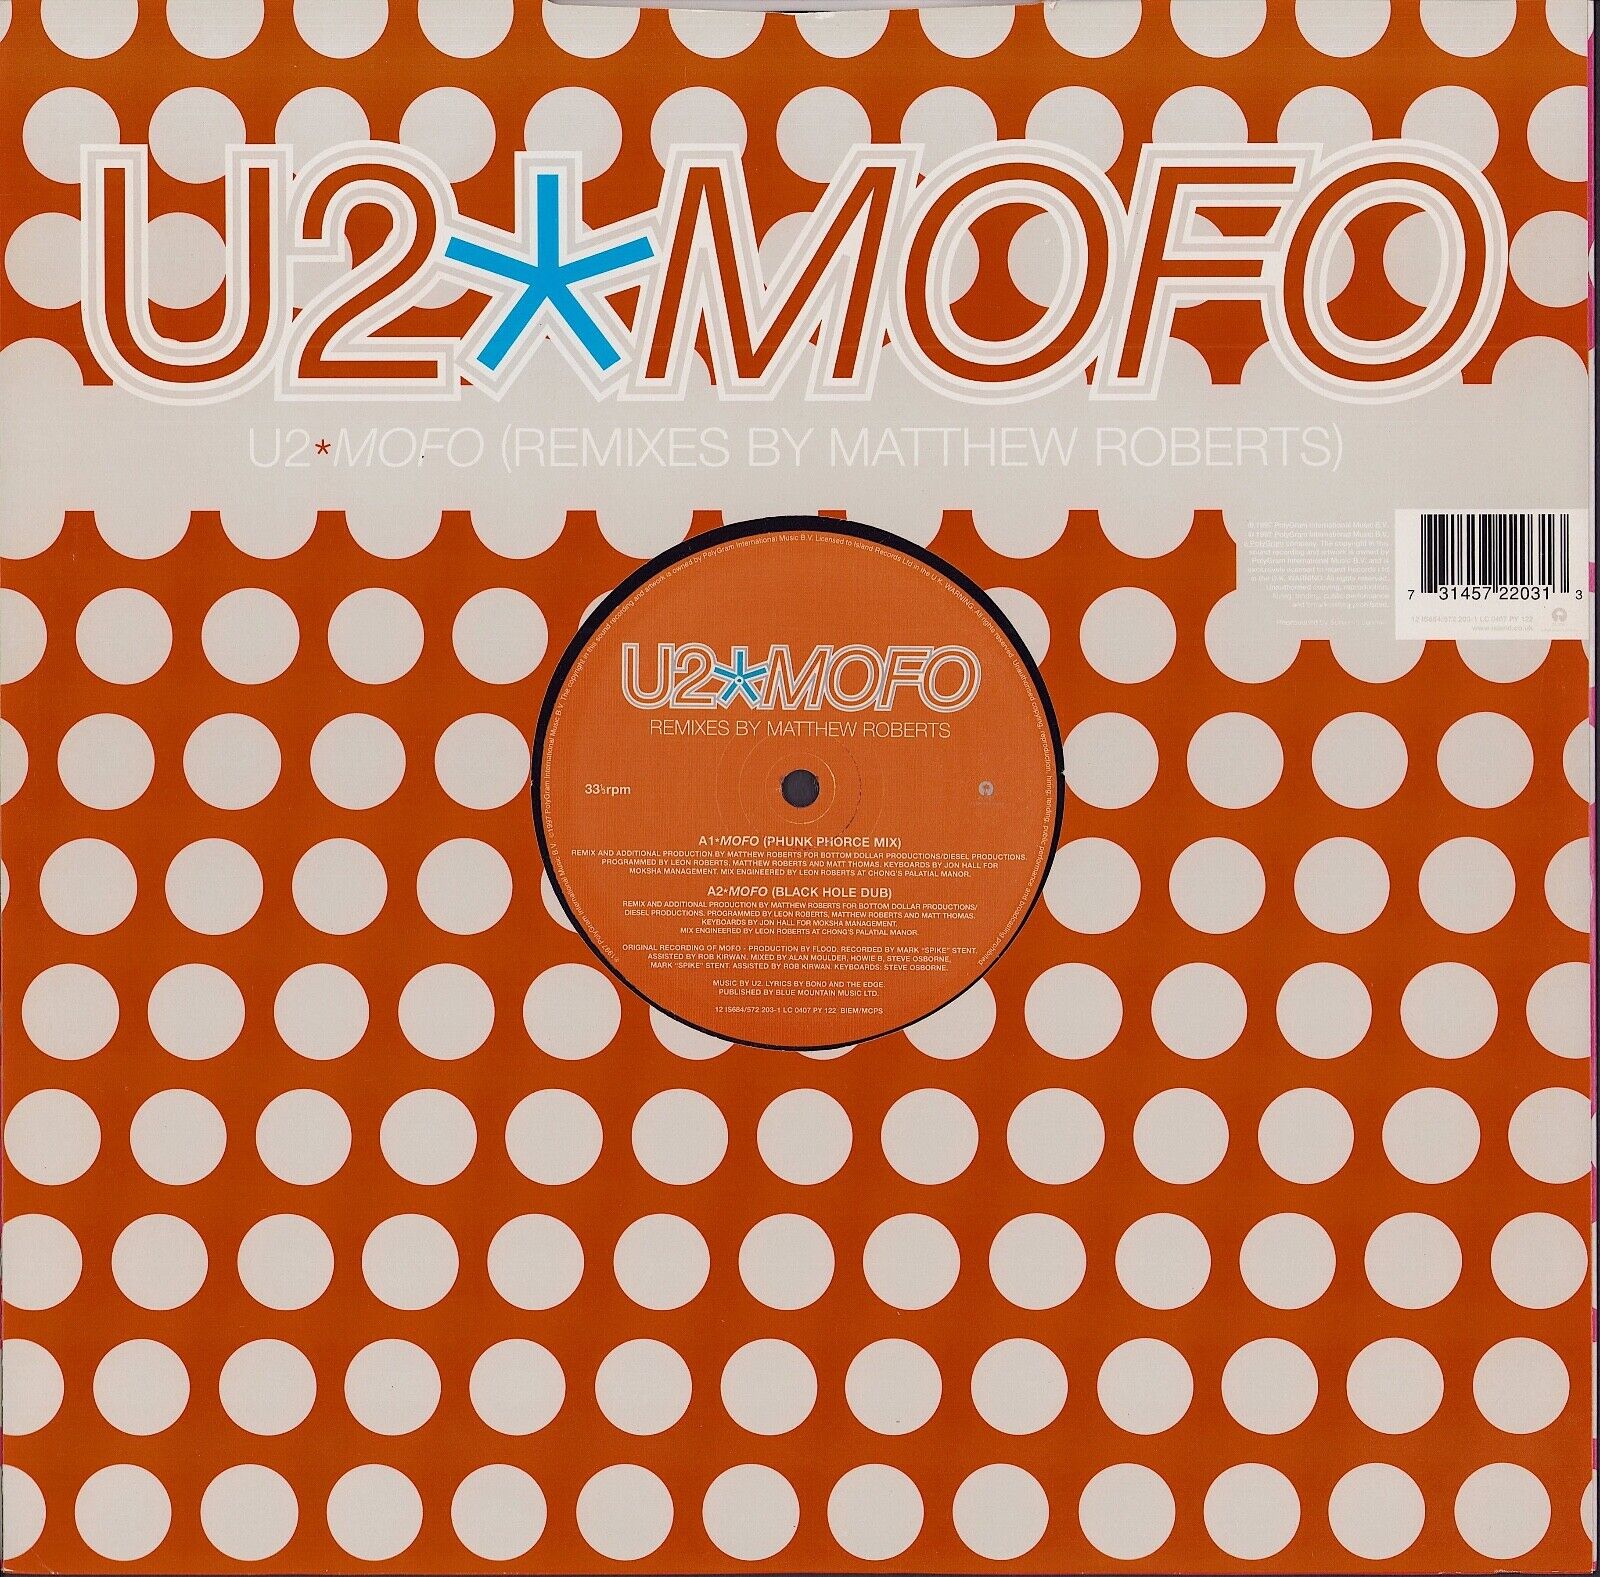 U2 ‎- MOFO Remixes By Matthew Roberts, Roni Size & Romin Vinyl 12"